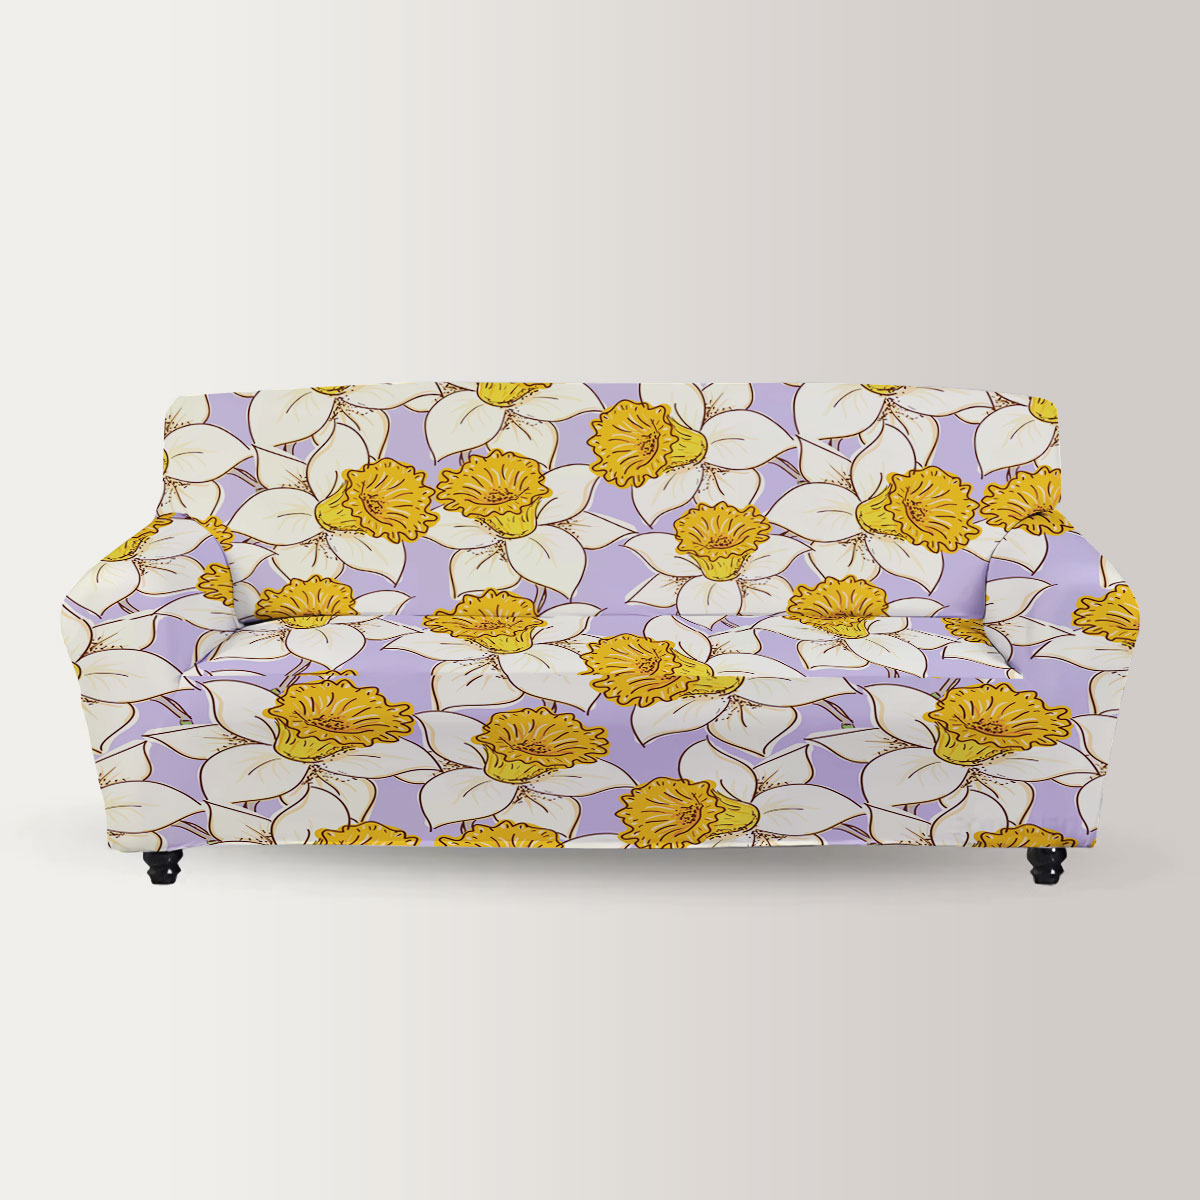 White Daffodils On Purple Background Sofa Cover